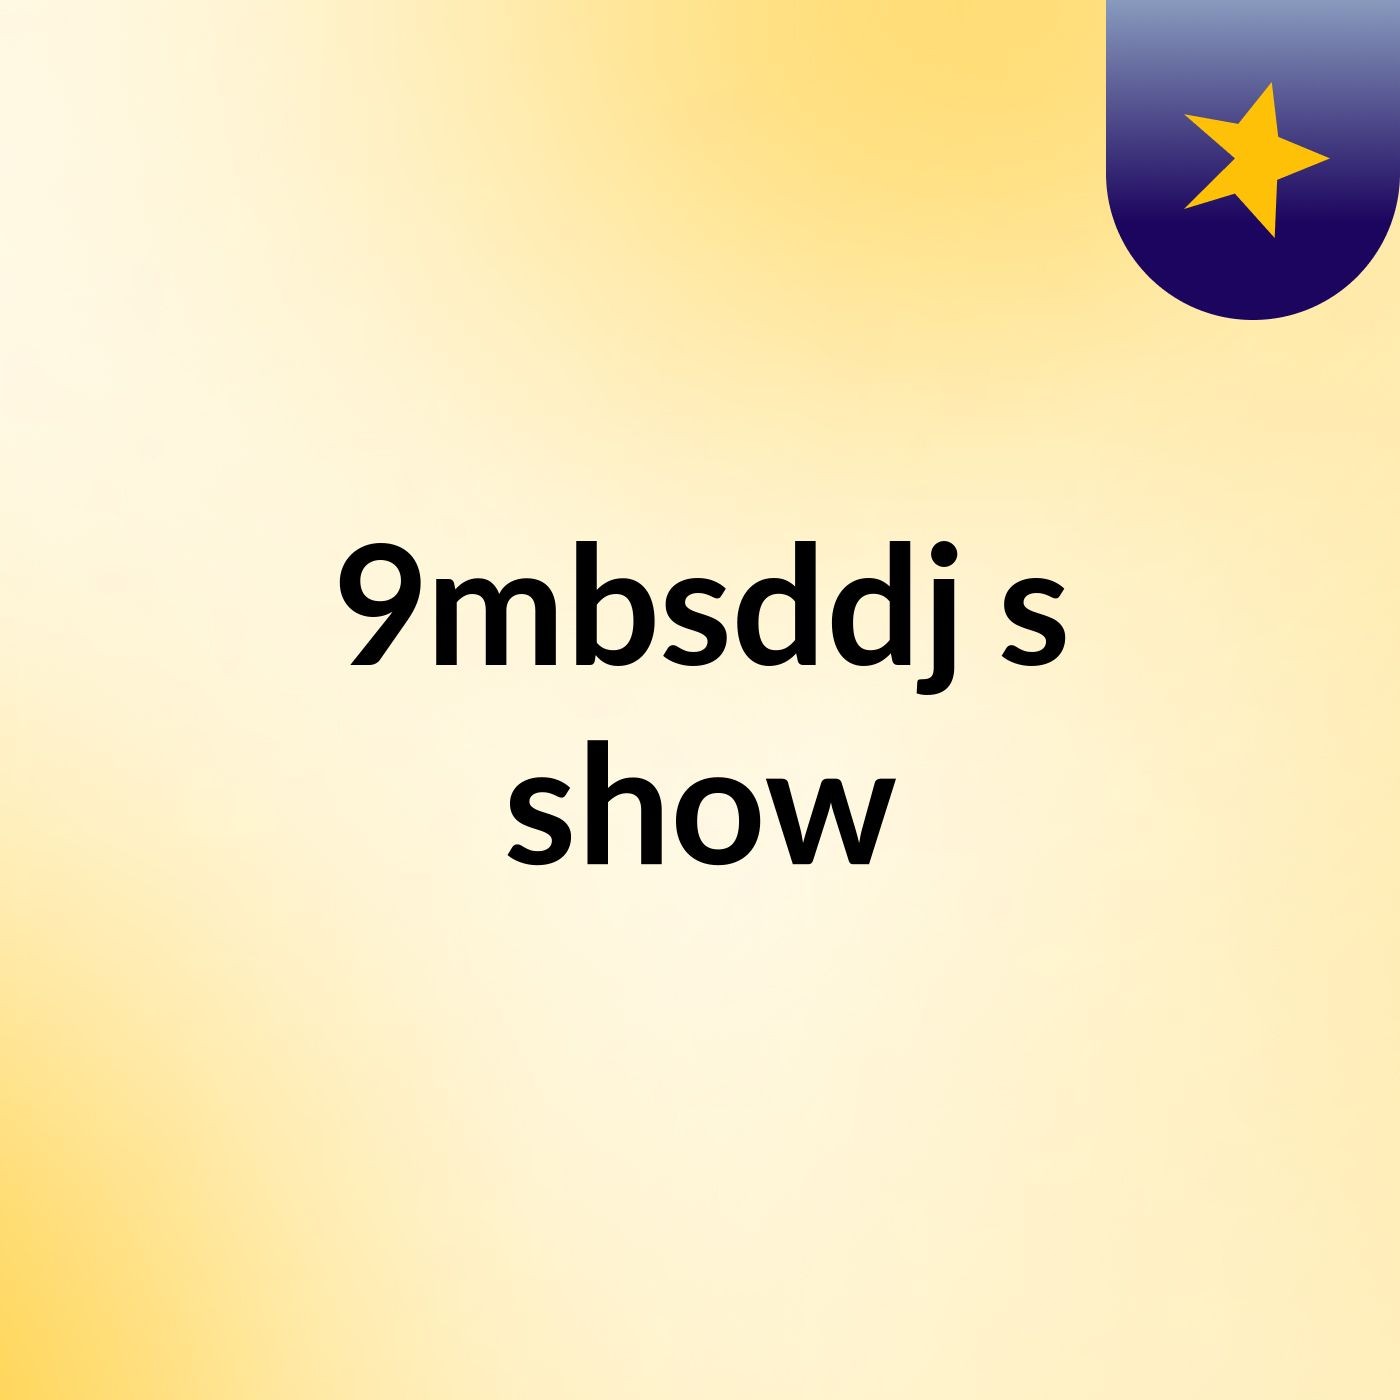 9mbsddj's show